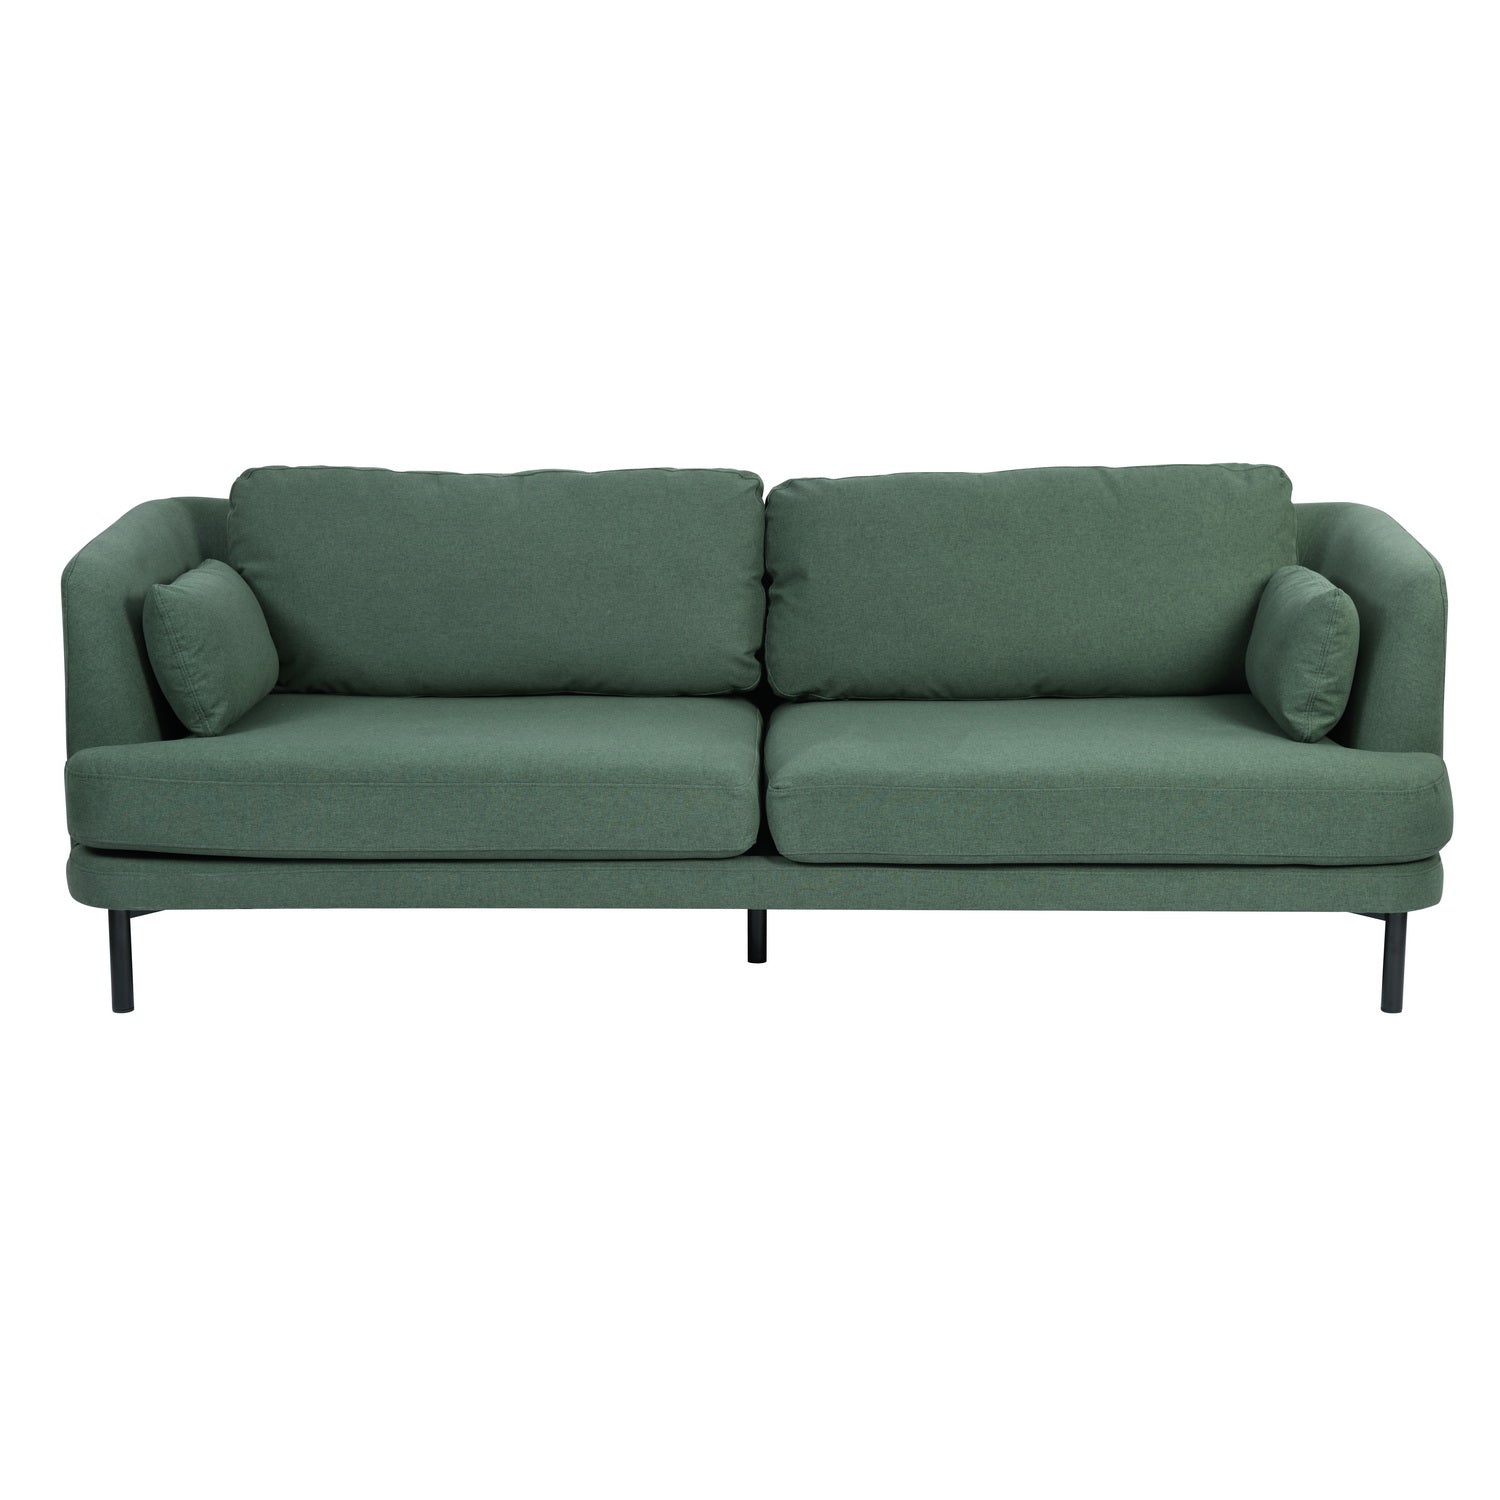 Clemency Double Seat Sofa